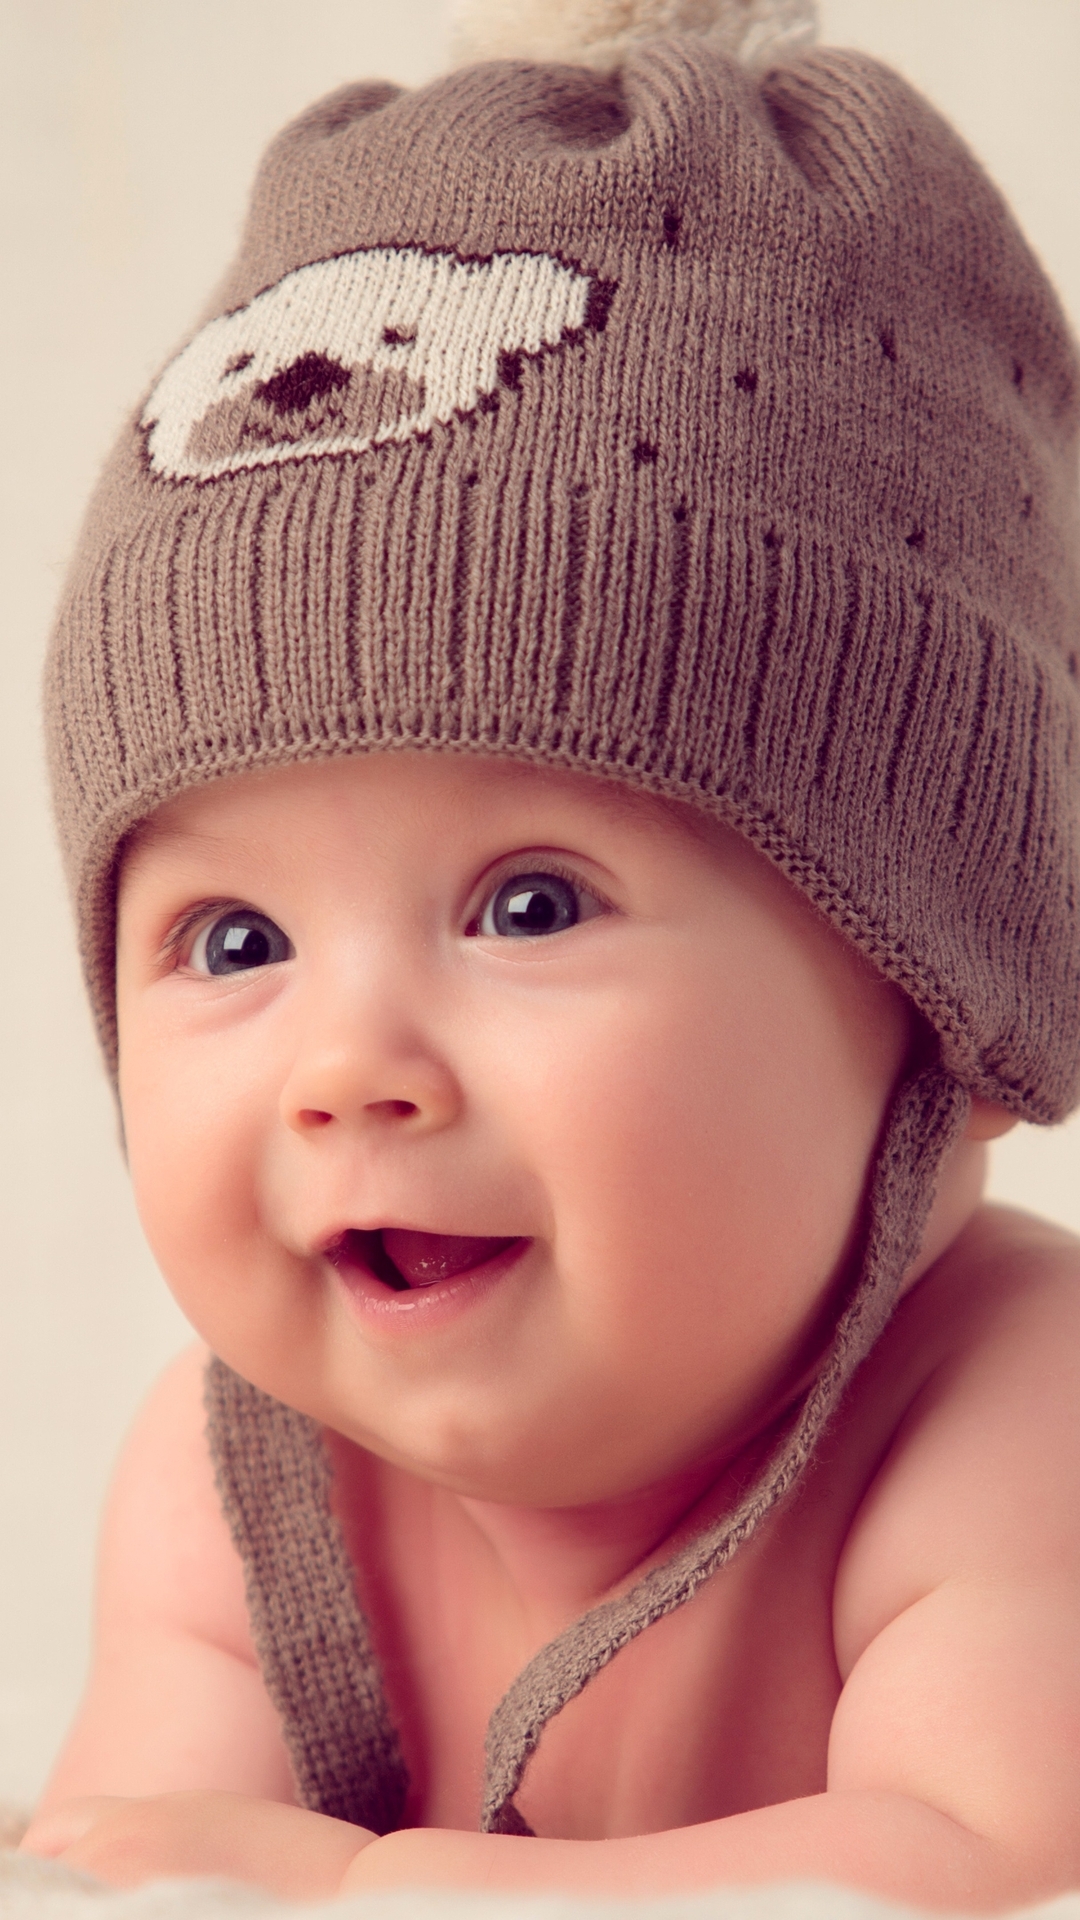 Картинка: Младенец, улыбка, радость, шапка